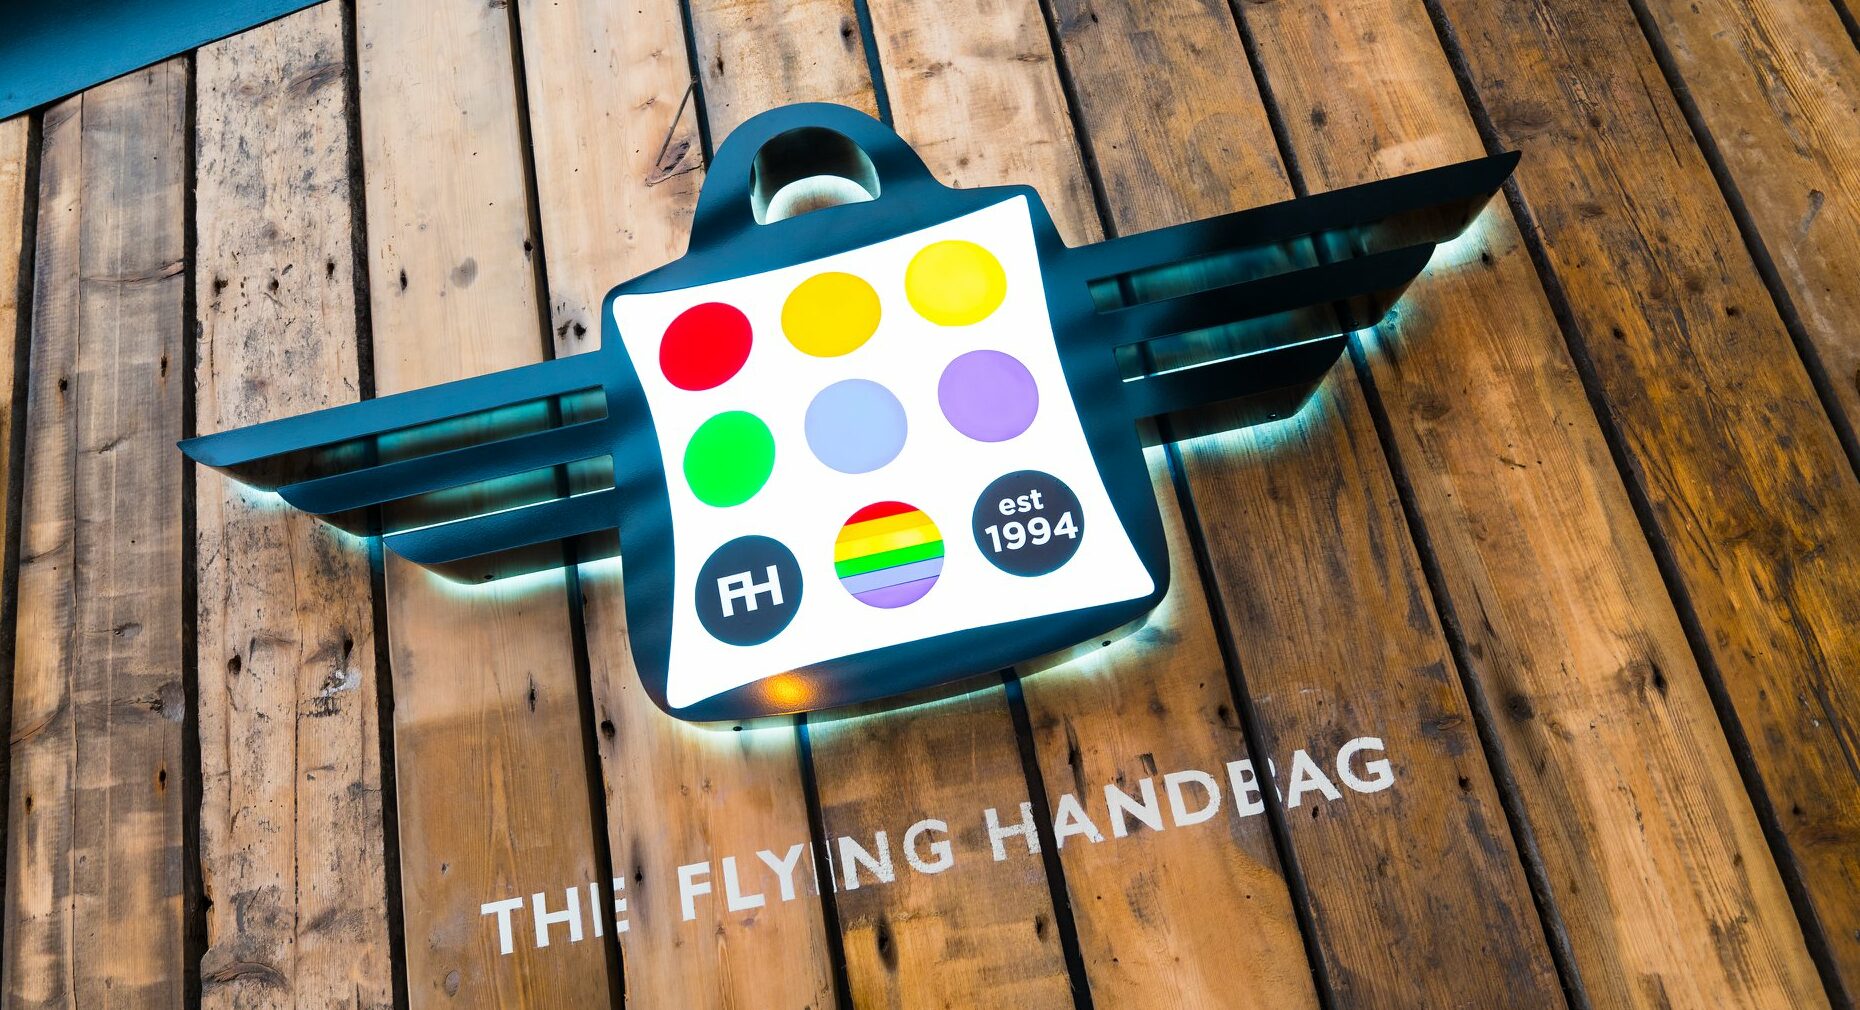 The Flying Handbag